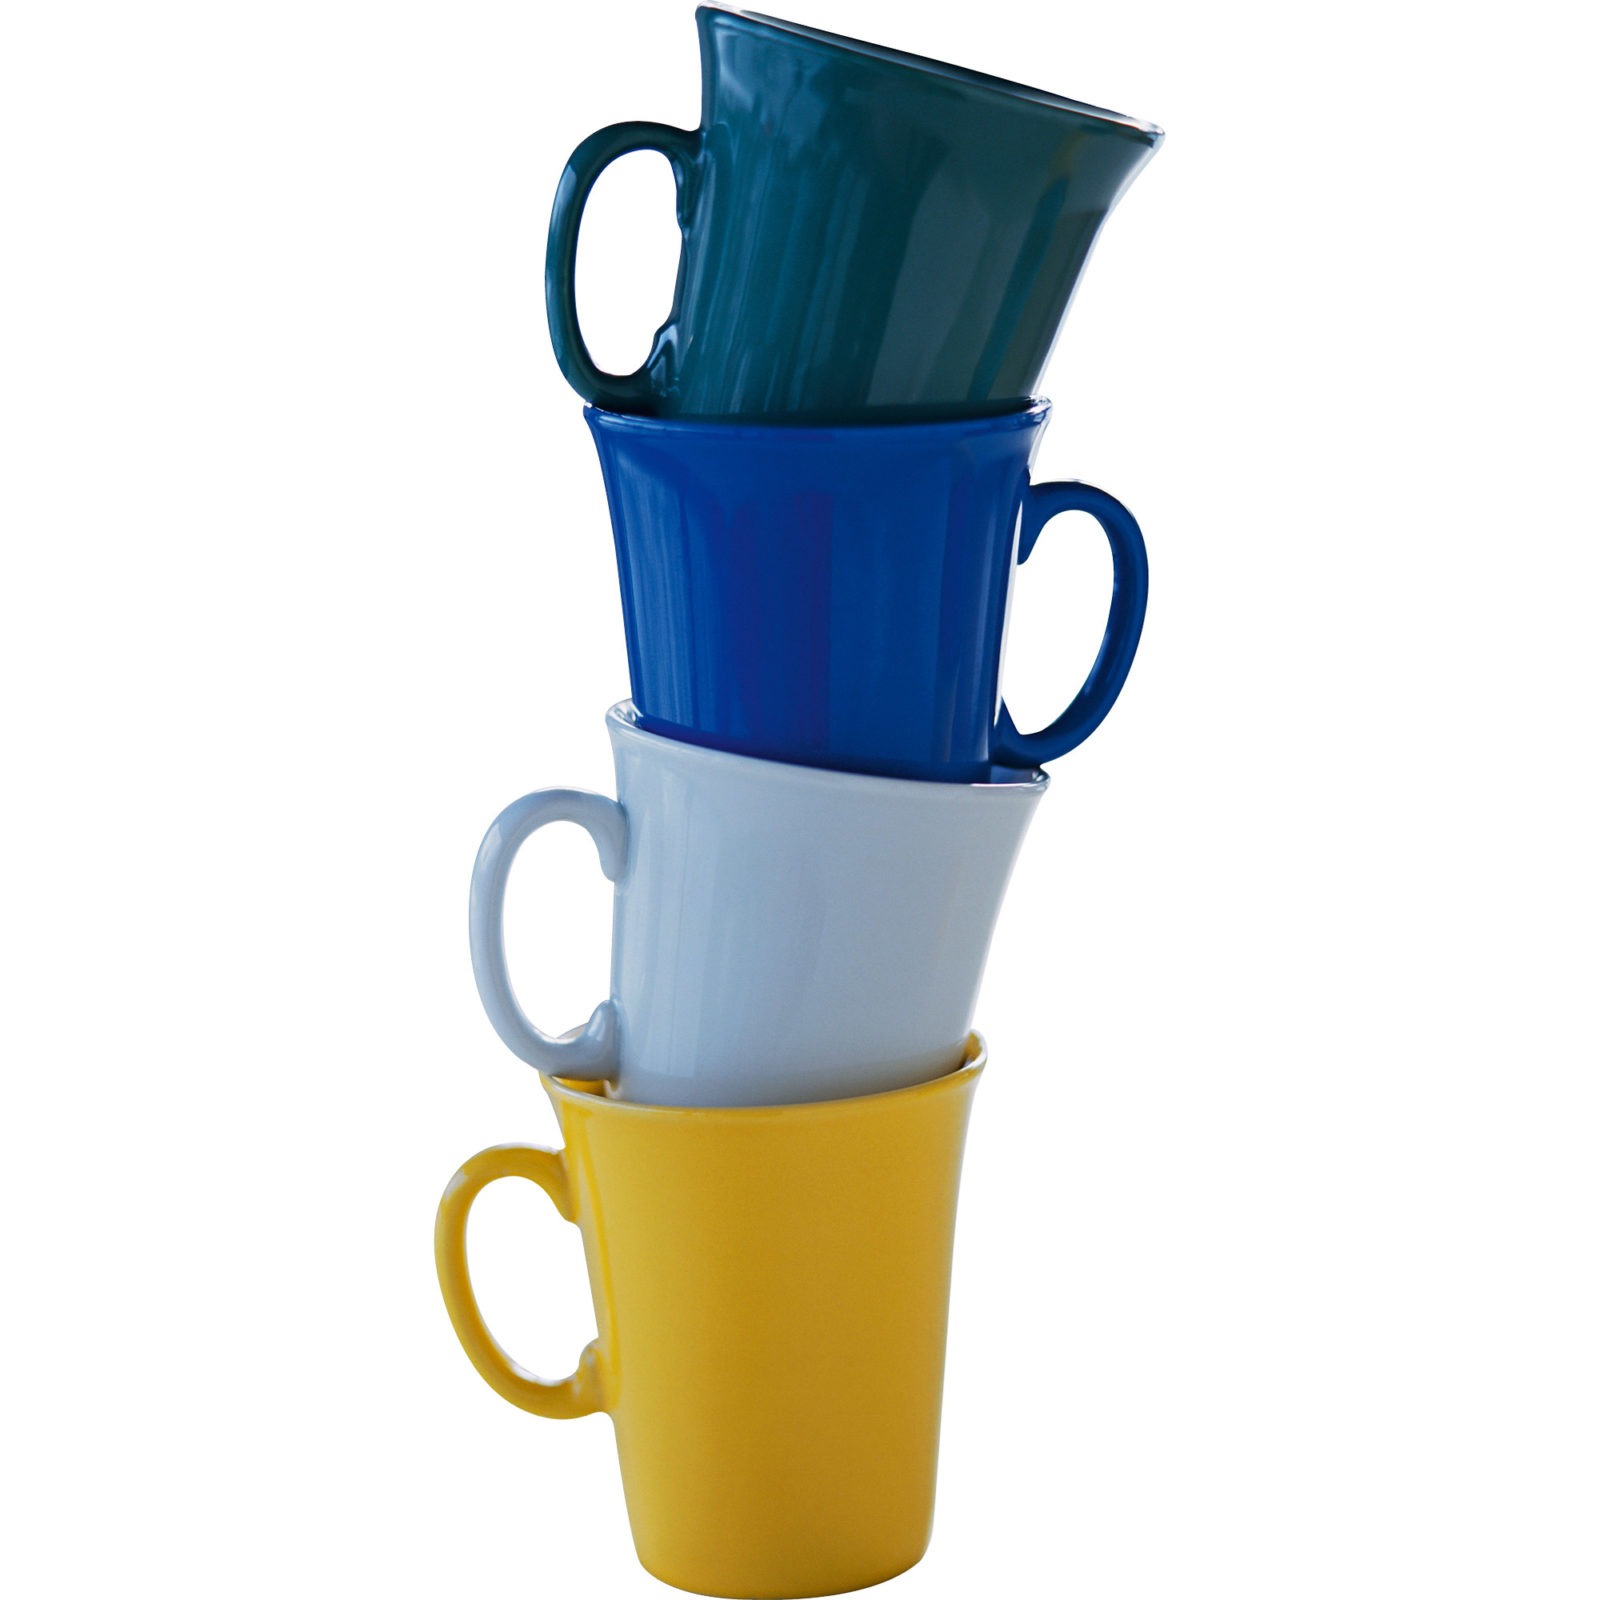 Three basic mugs, blue, light blue and yellow, BANG.